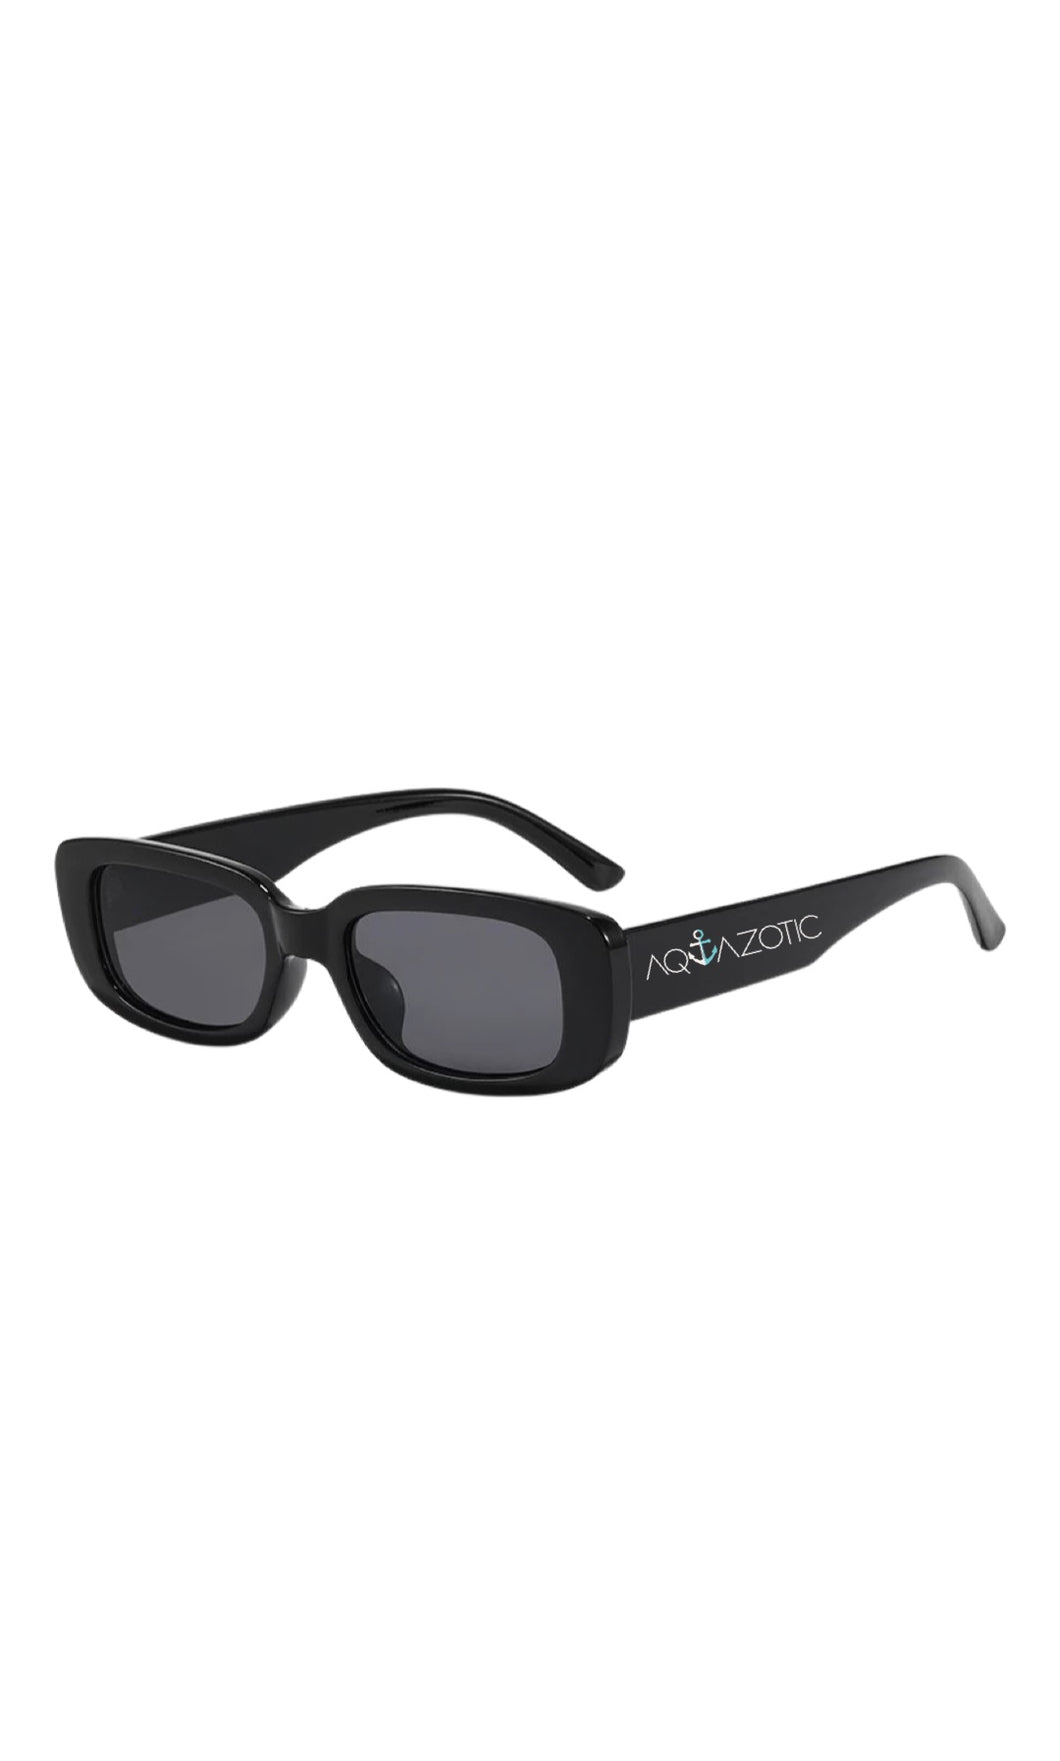 Tech-house sunglasses black